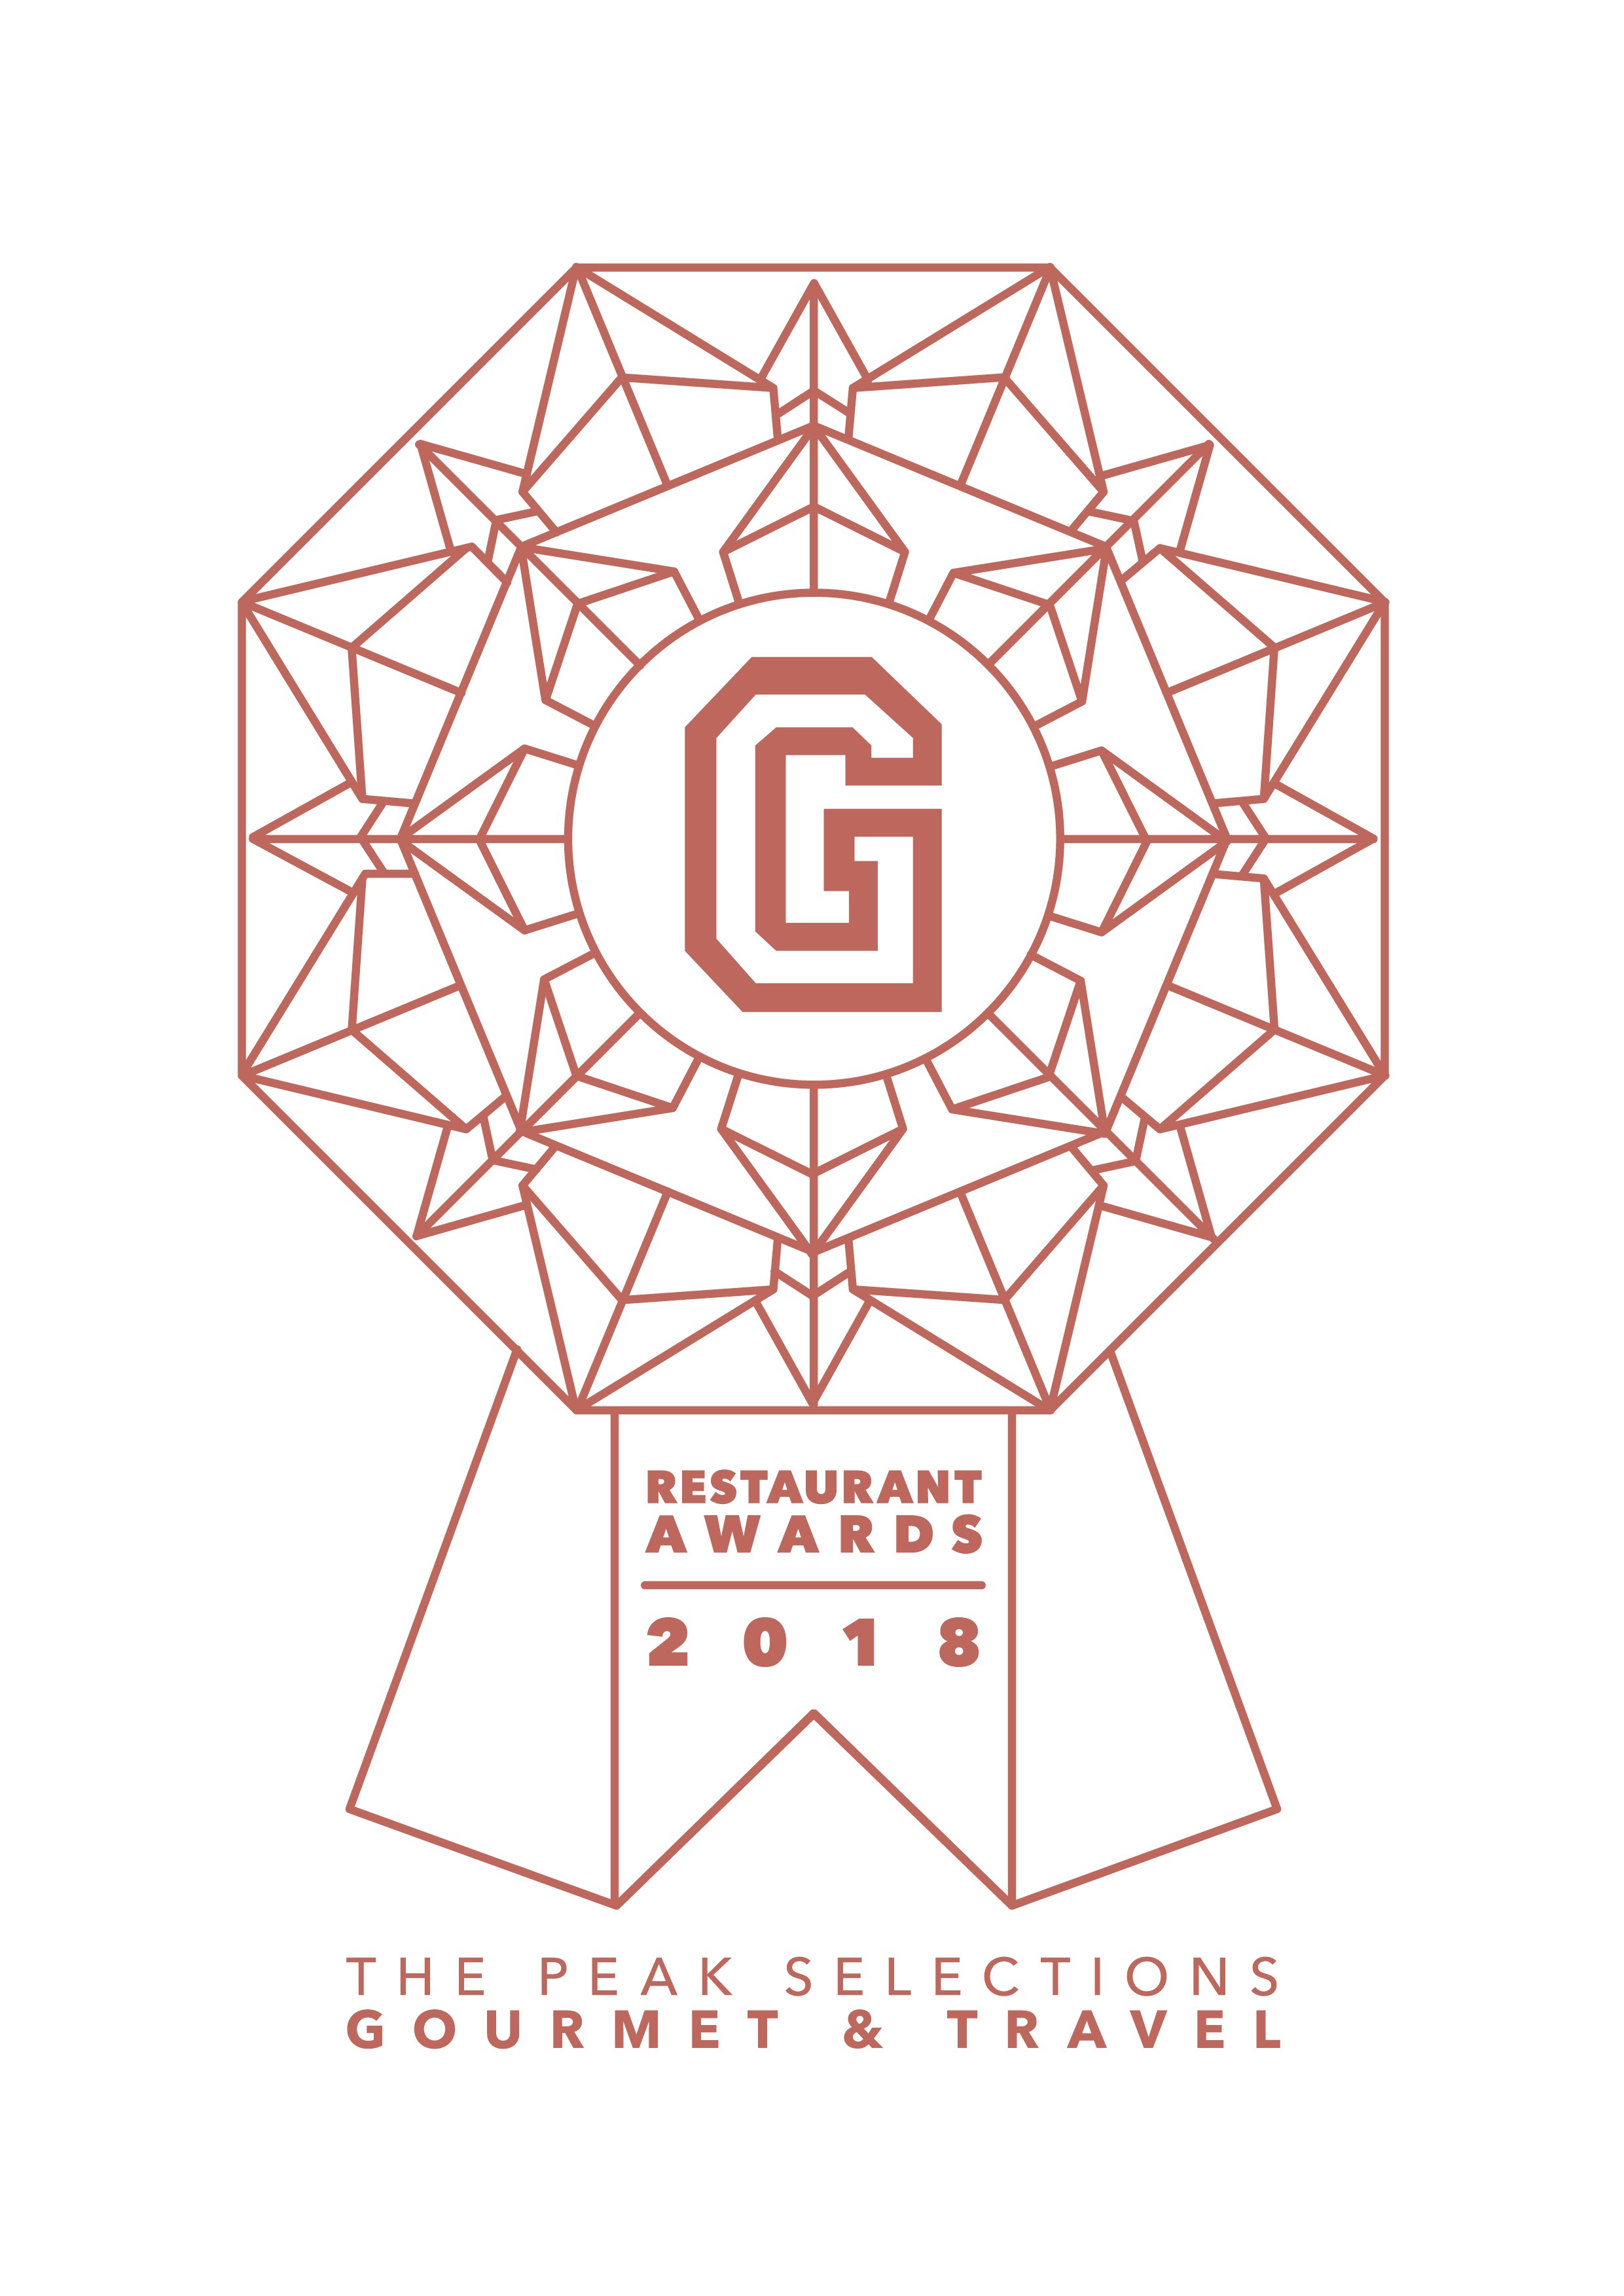 G Restaurant Awards 2018 — Awards of Excellence